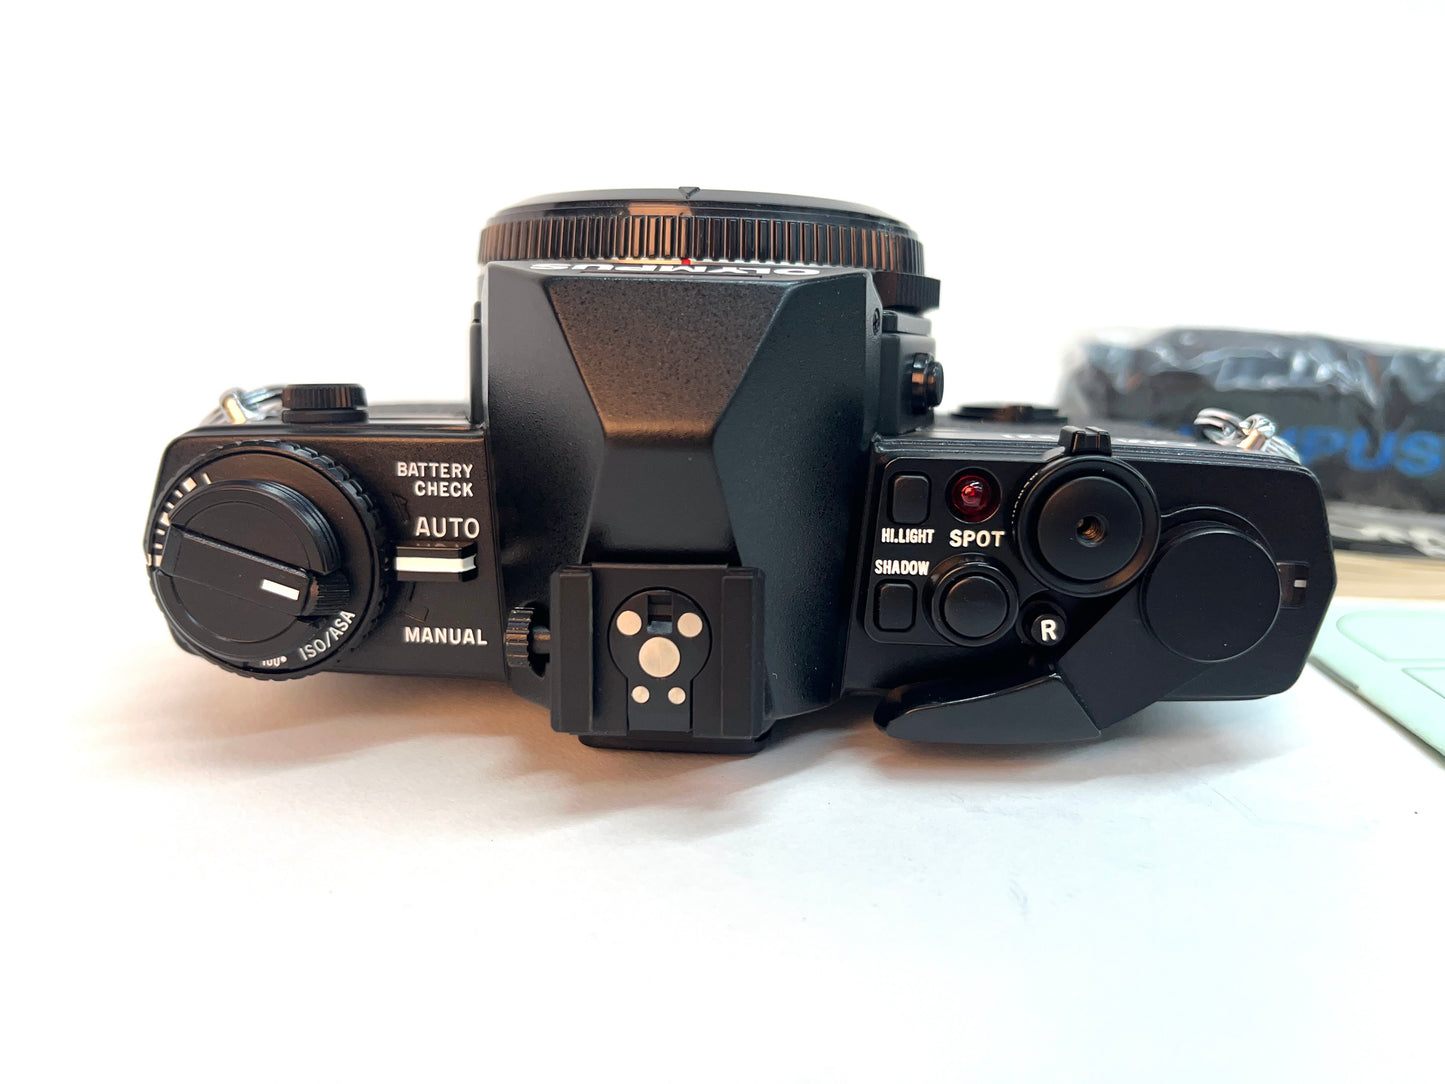 Olympus OM-4Ti Black New Old Stock 35mm Film Camera RARE Boxed